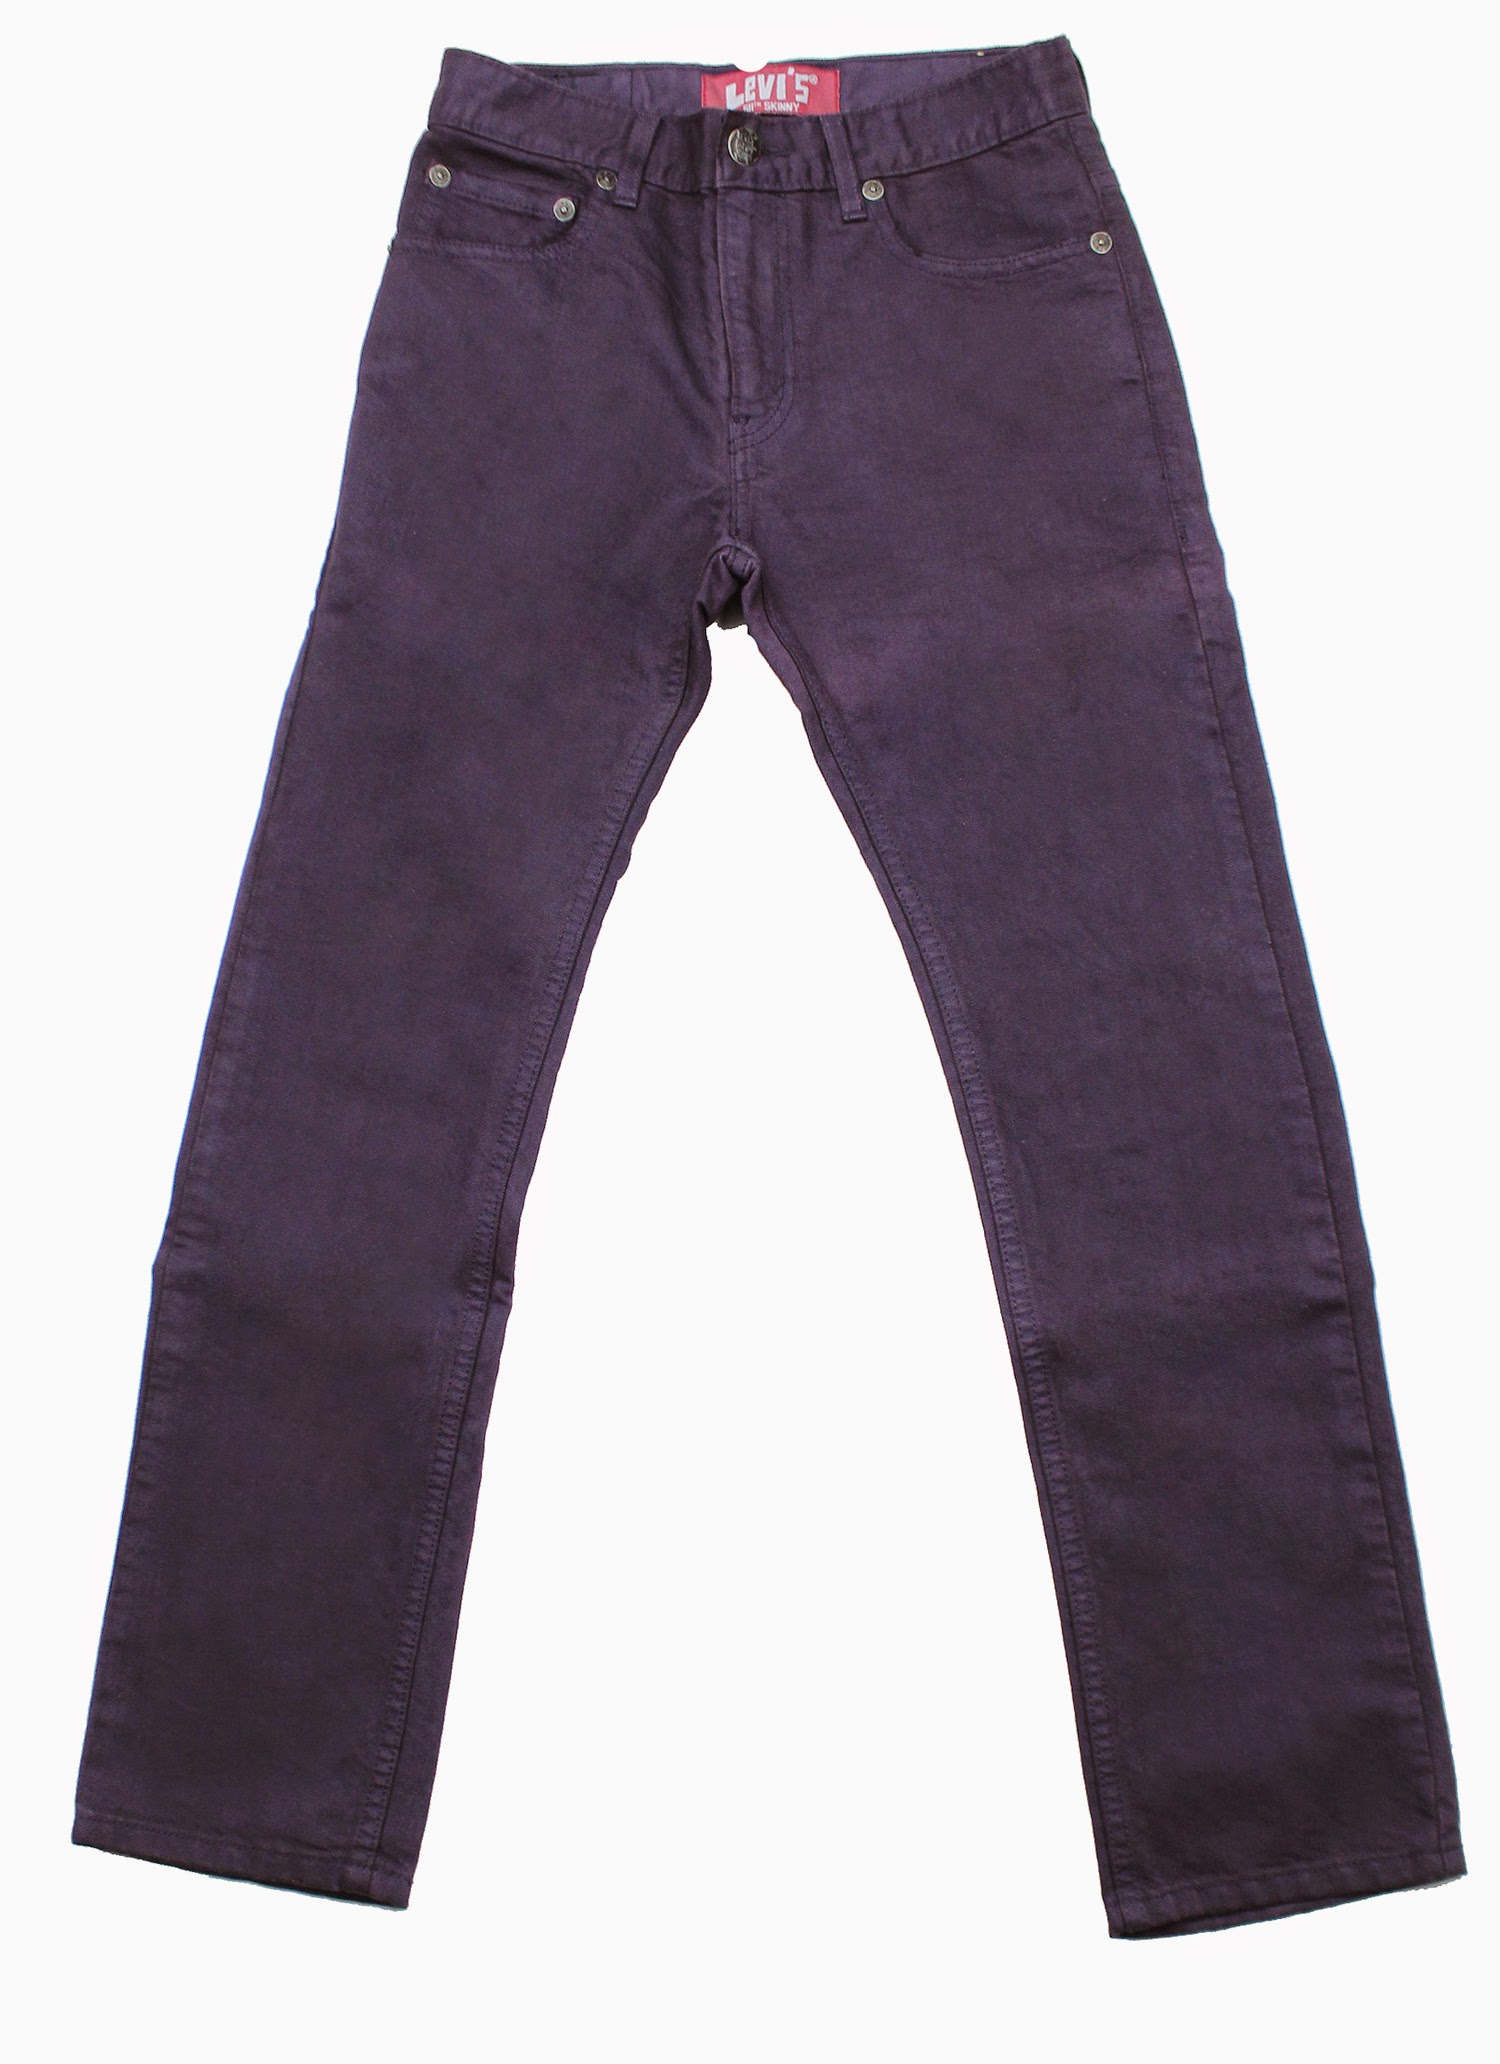 Levi's Youth 511 F0133 Boys Skinny Fit Denim Jeans Pants Purple | eBay